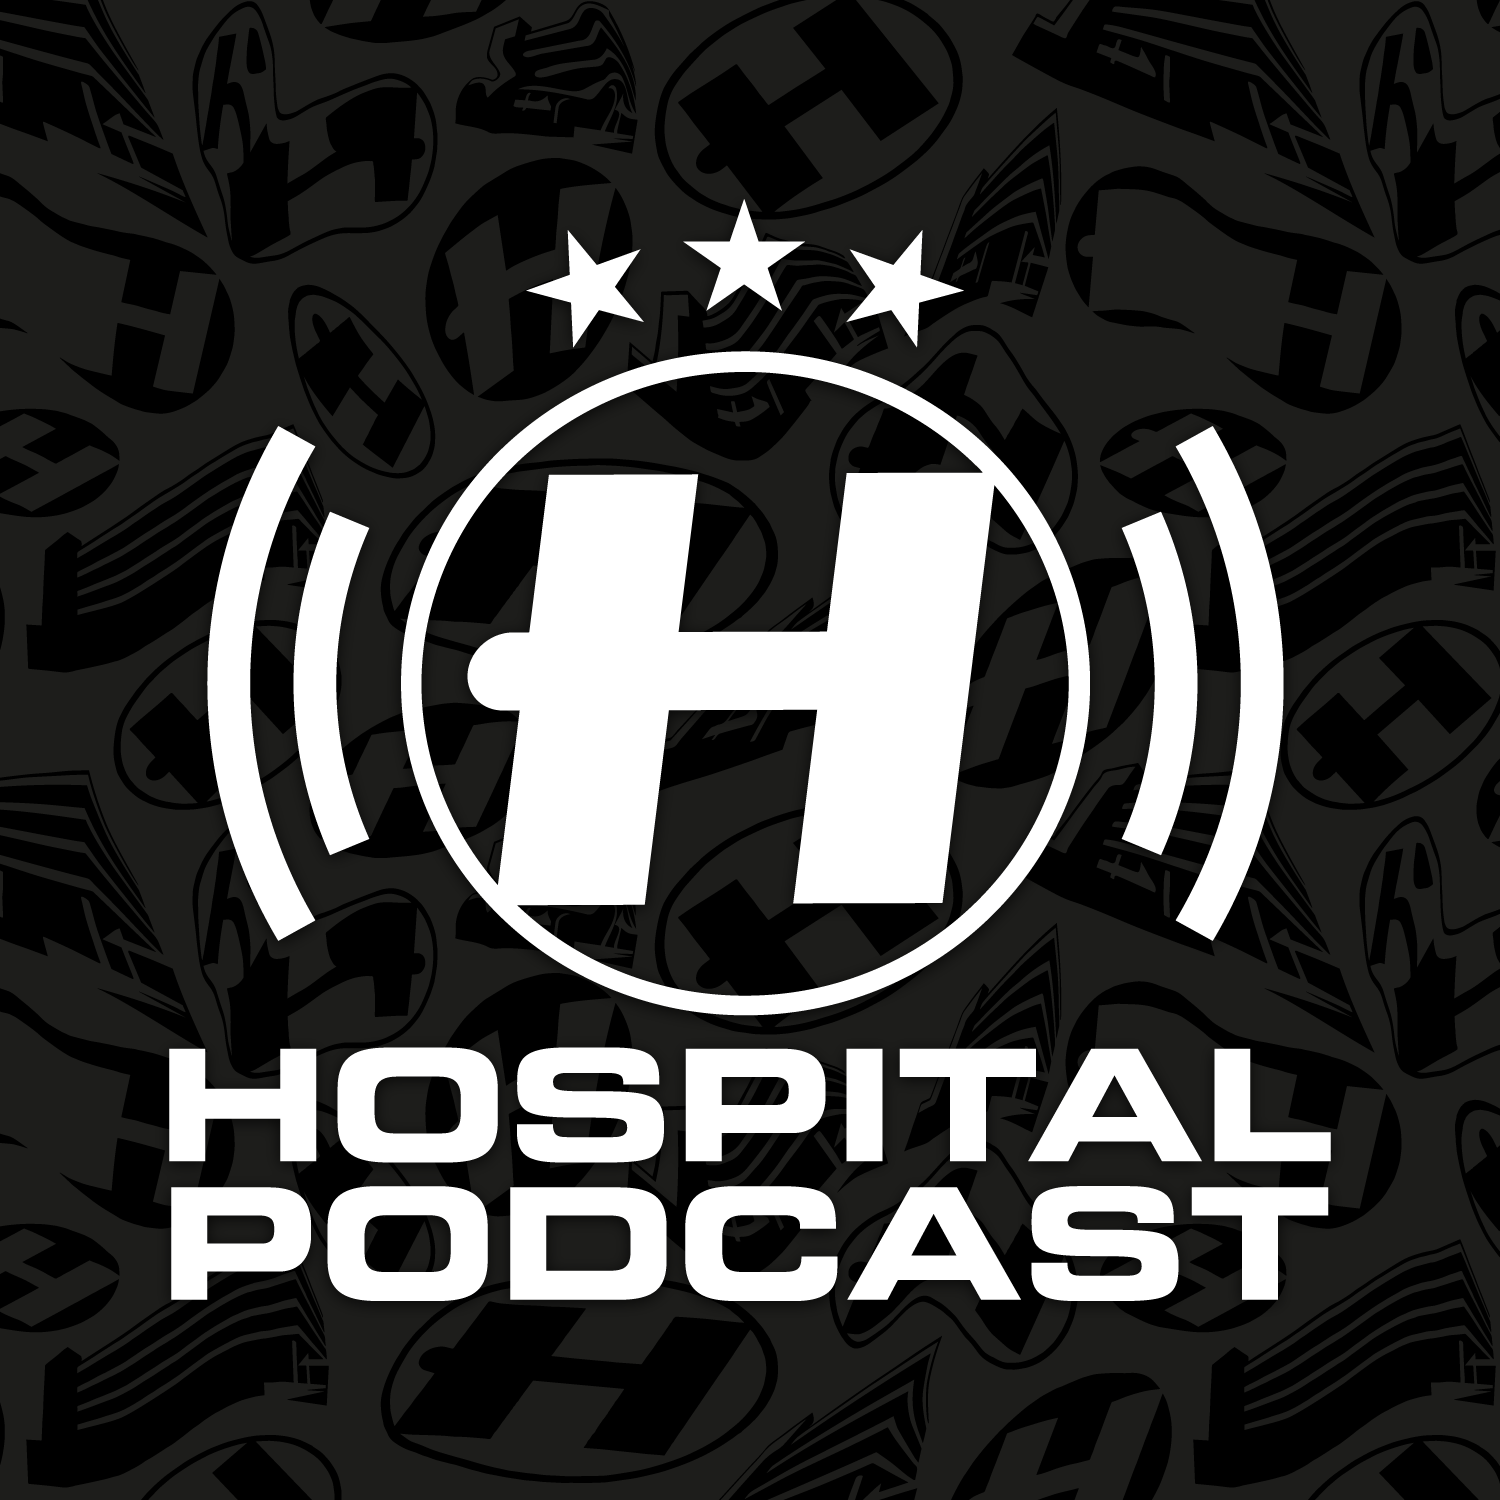 Hospital Podcast 428 with London Elektricity Artwork